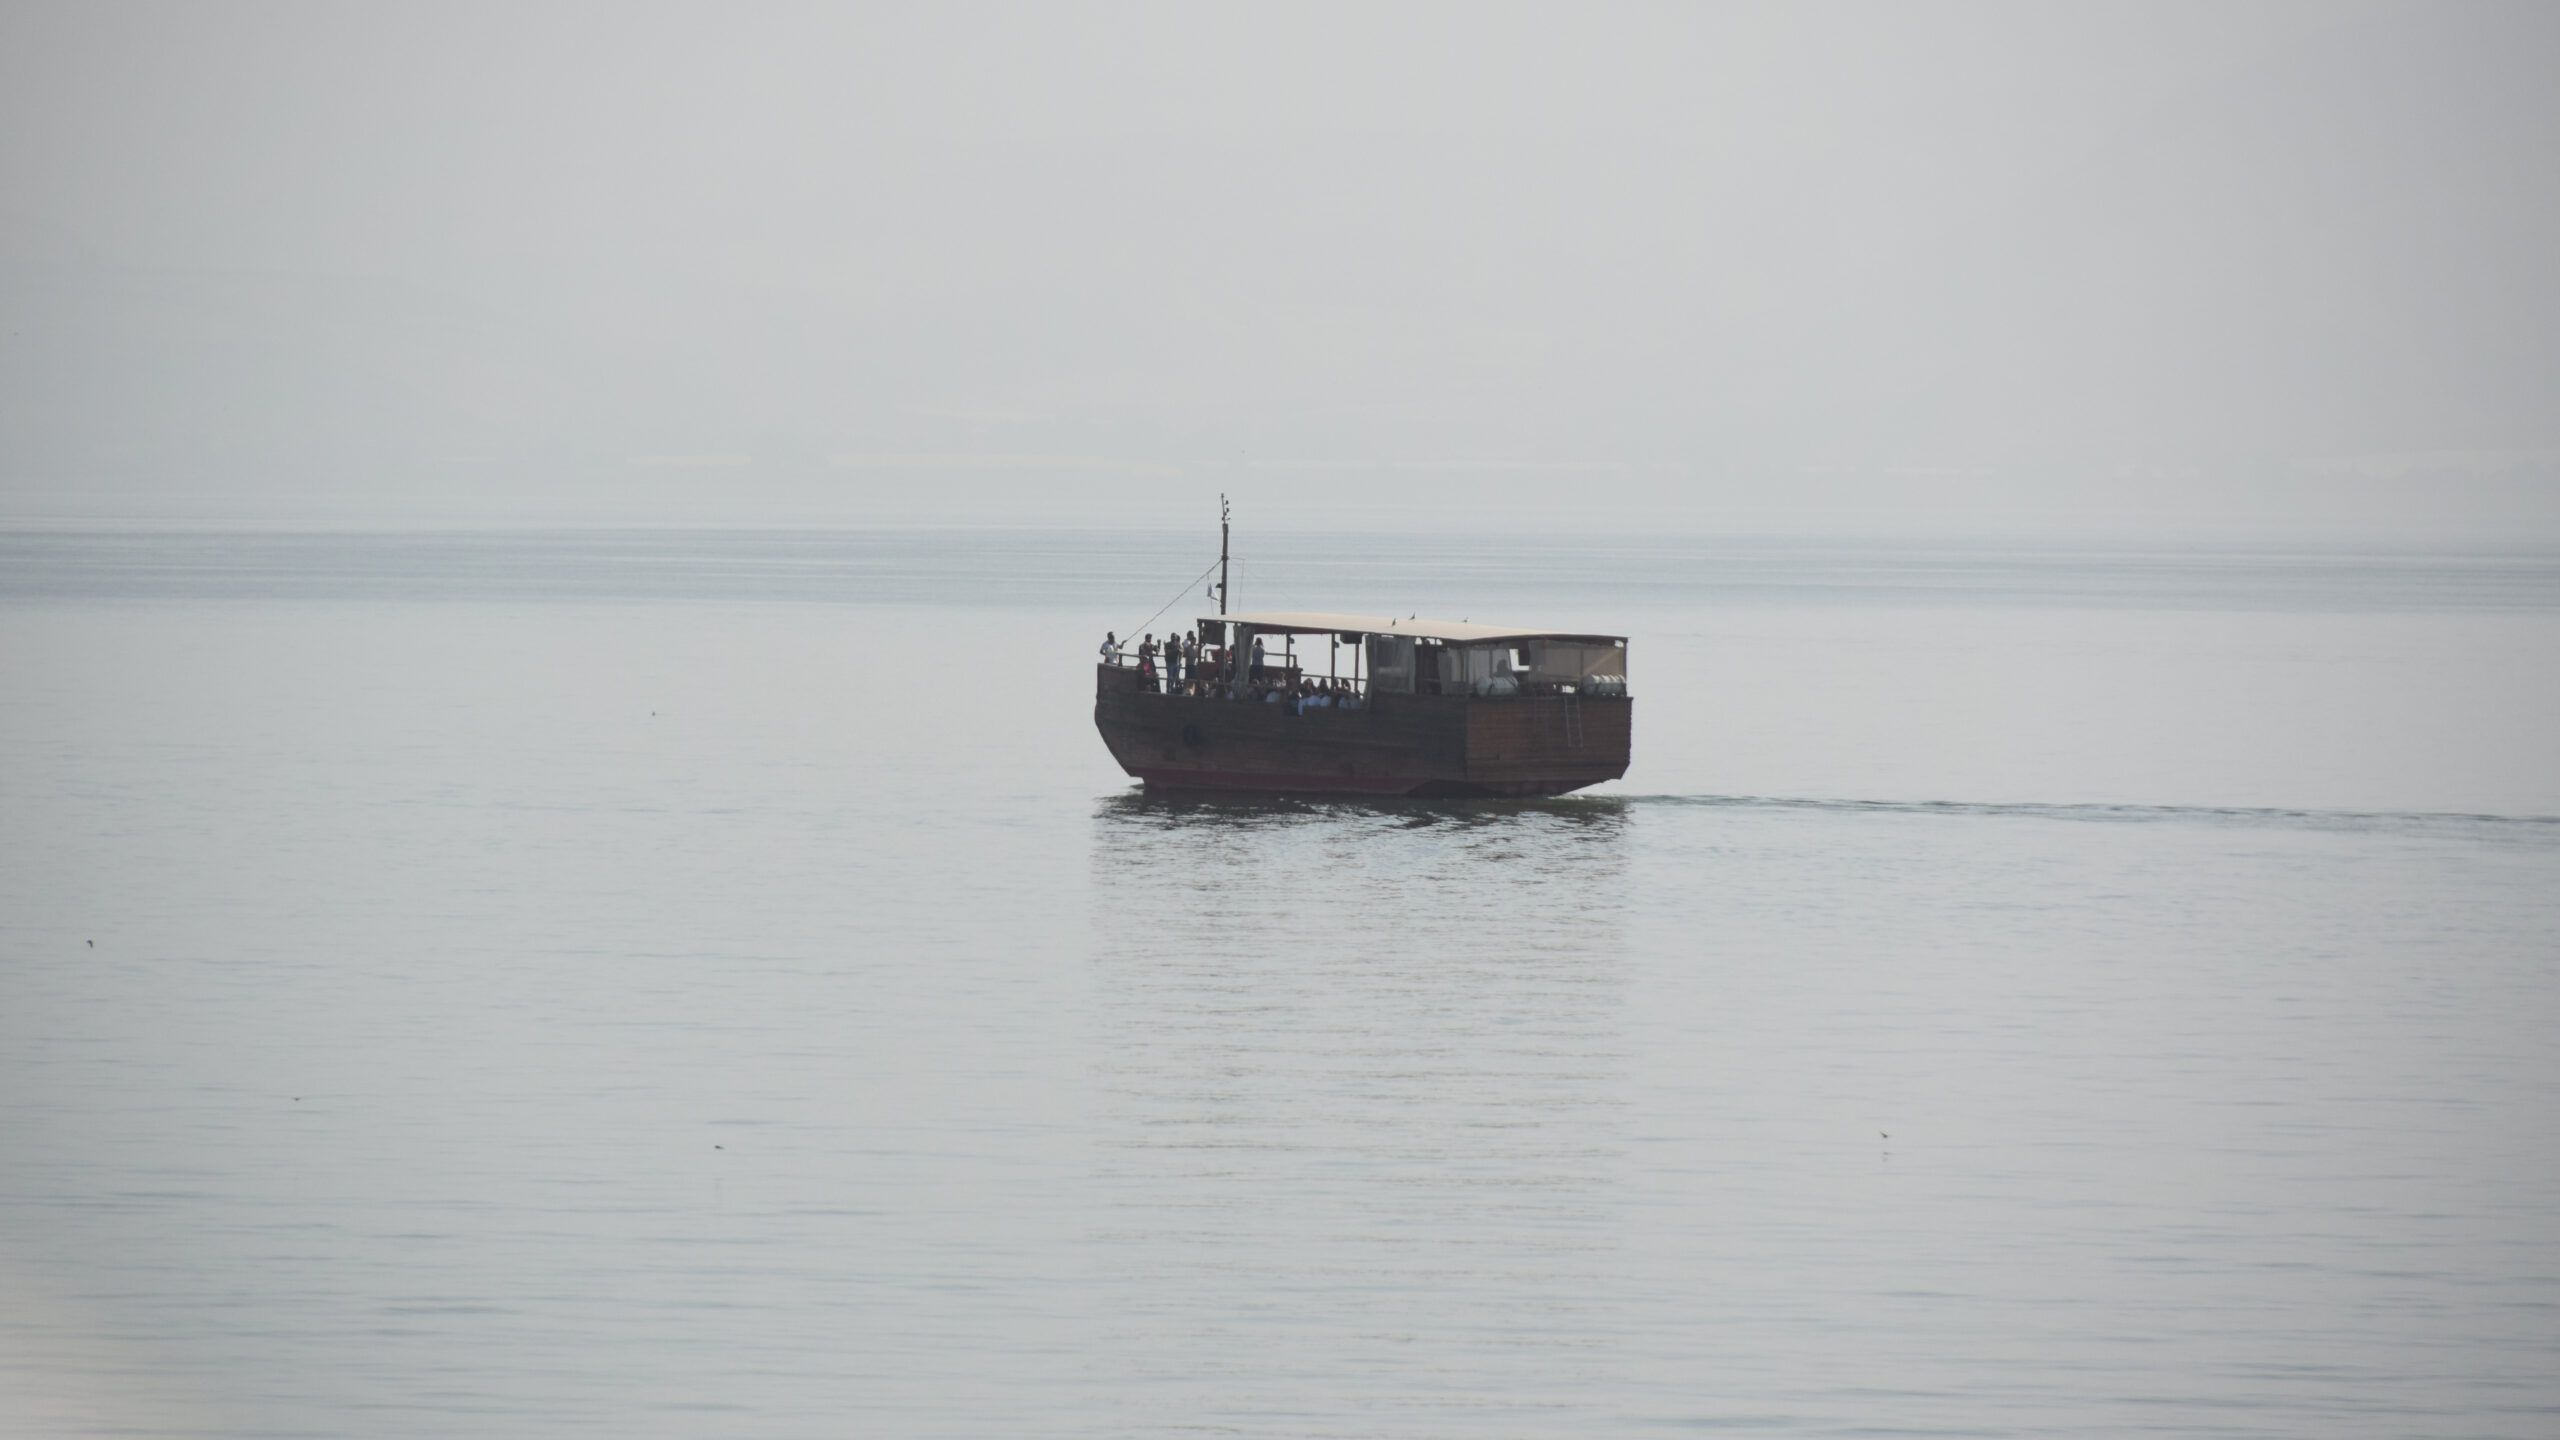 replica boat on the sea of galilee